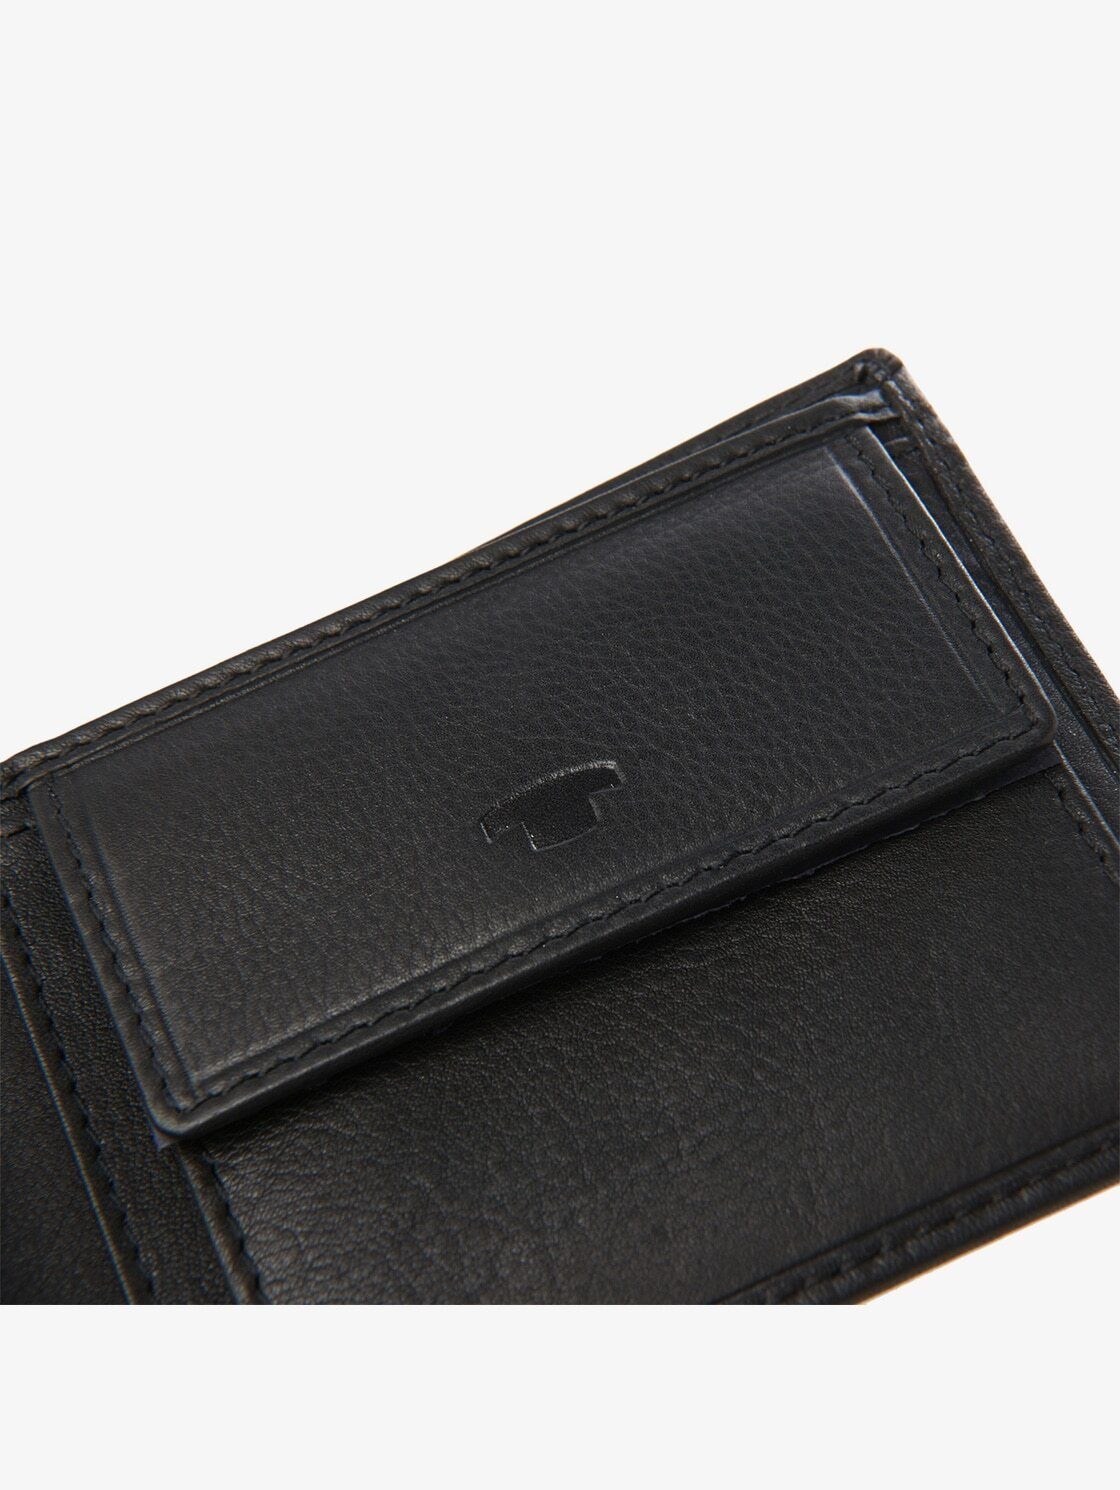 TOM TAILOR Geldbörse aus Leder Portemonnaie black / schwarz